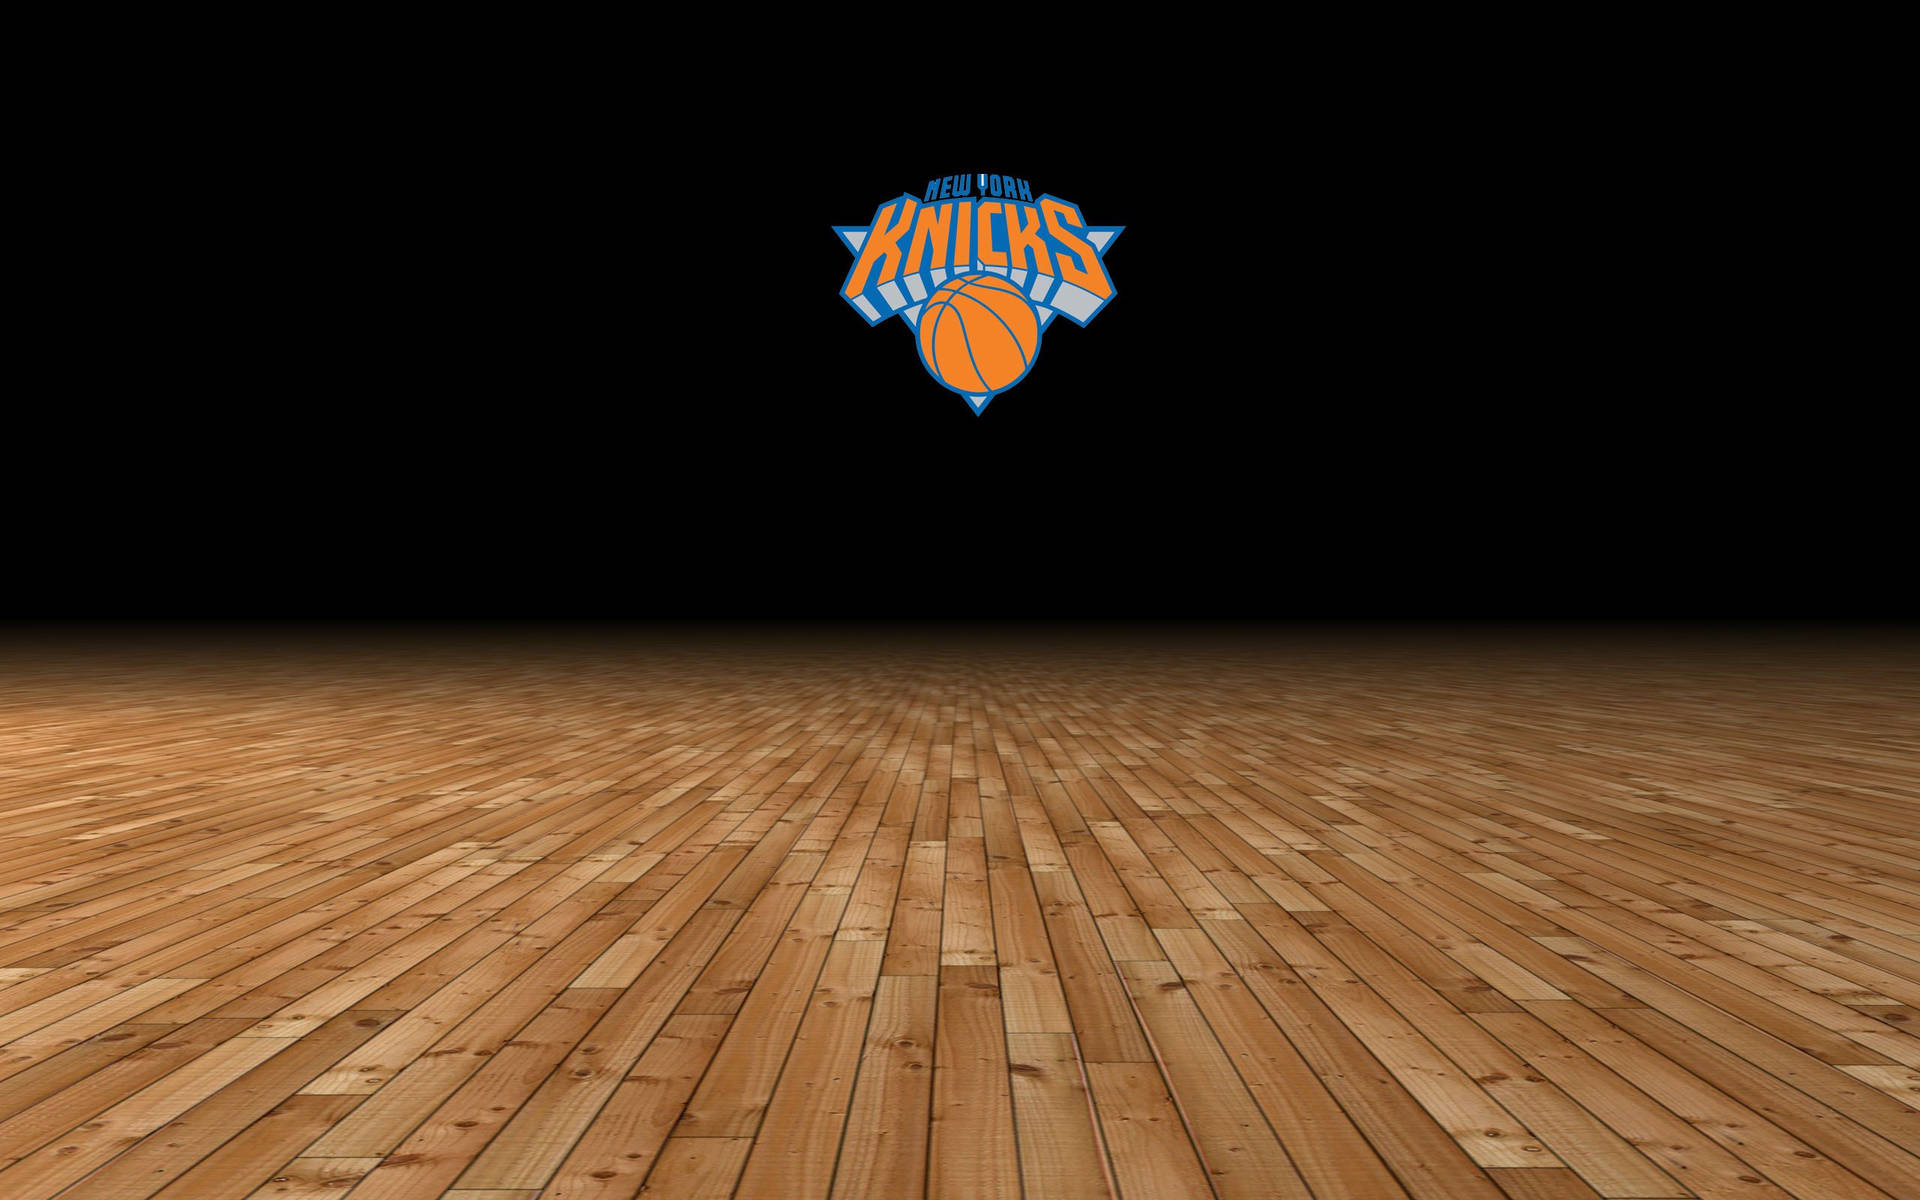 New York Knicks Wooden Floor Wallpaper